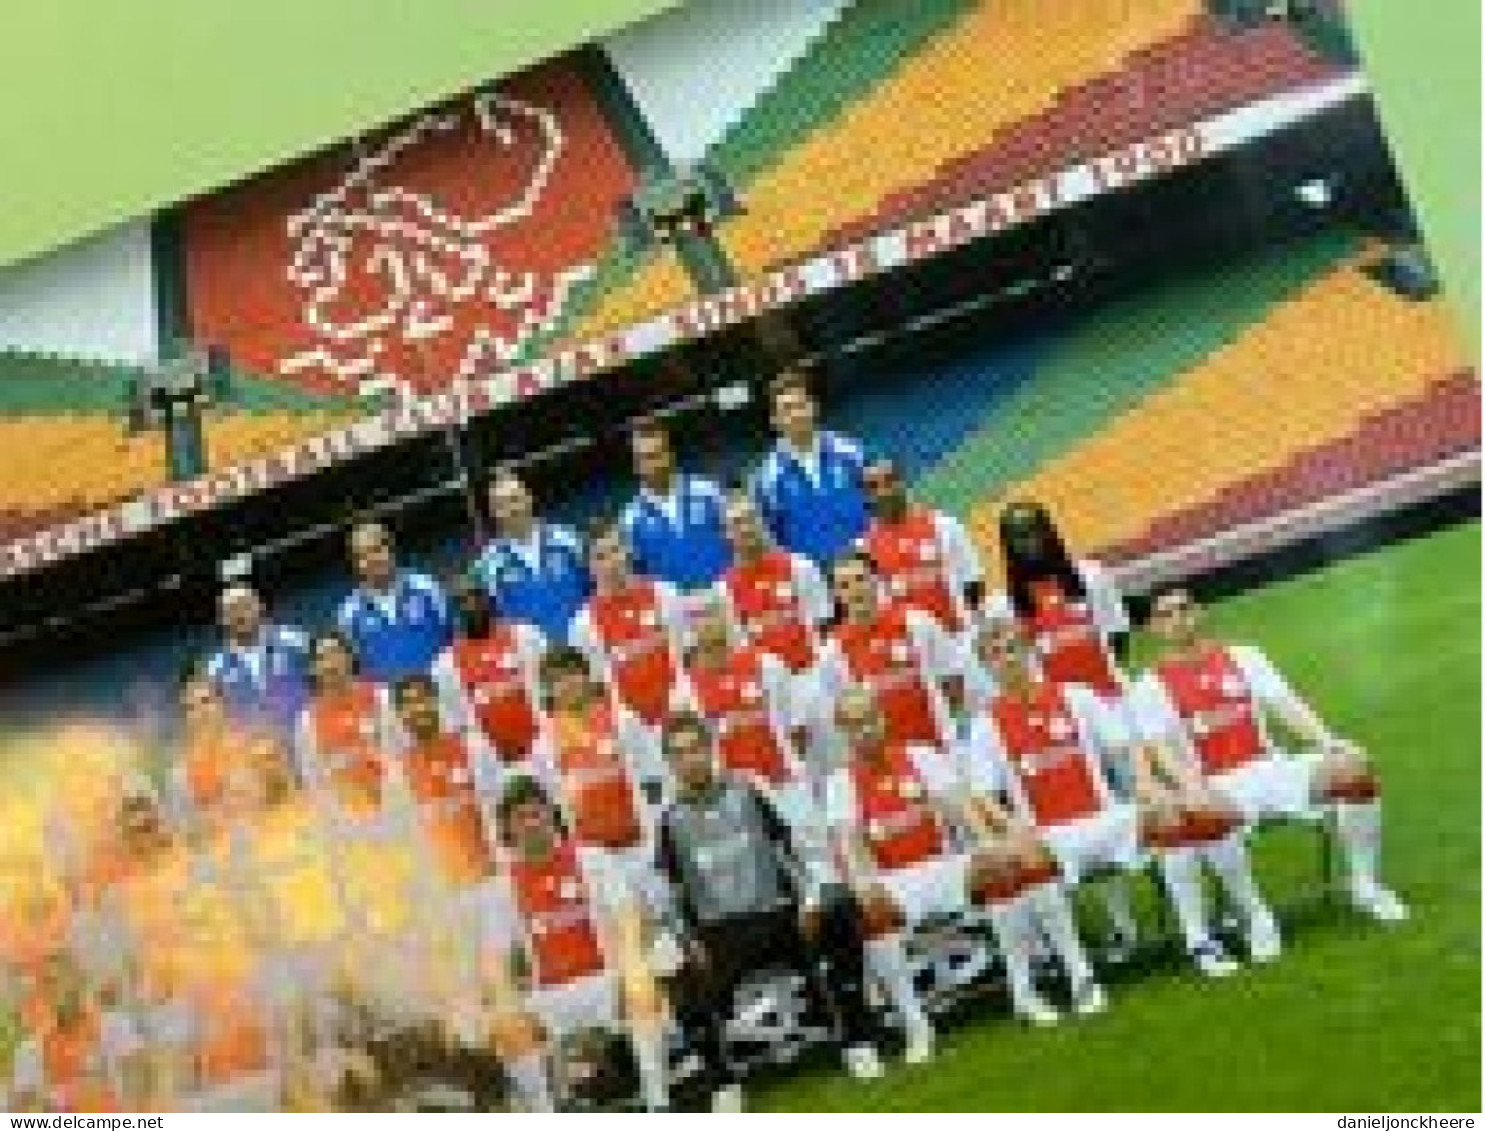 Ajax Foto Kick Off 23 - Apparel, Souvenirs & Other